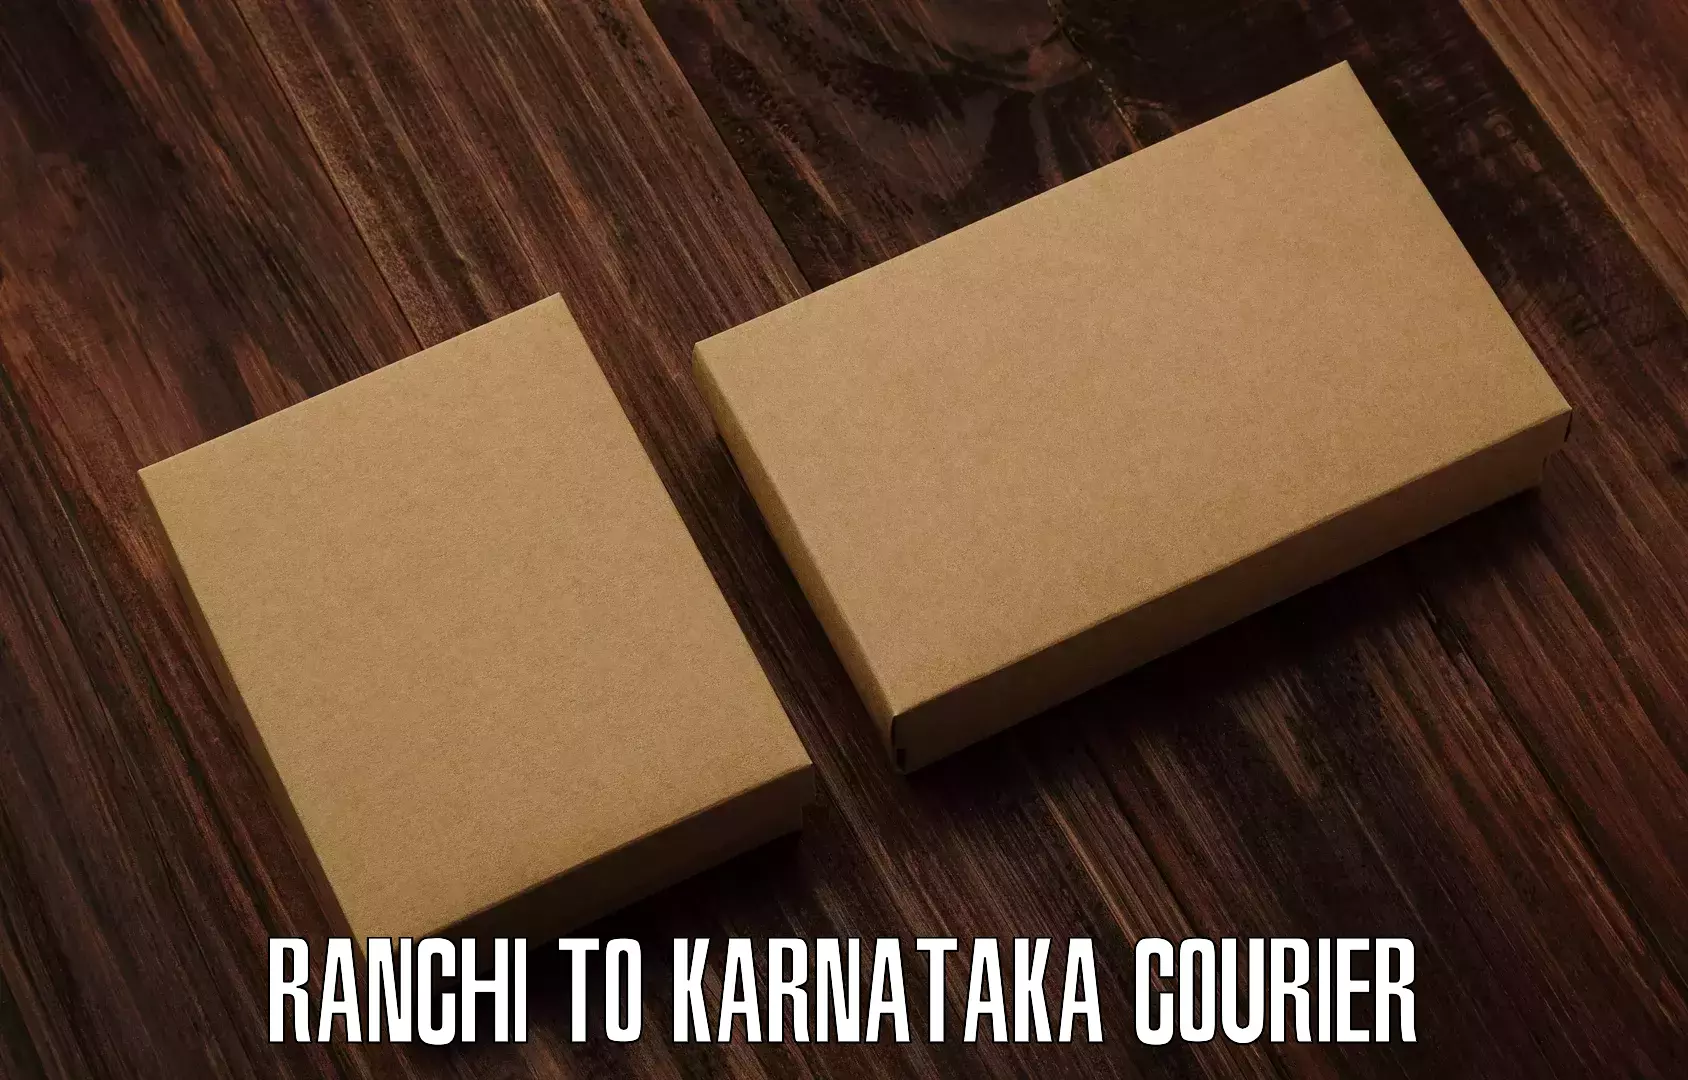 User-friendly courier app Ranchi to Yelburga